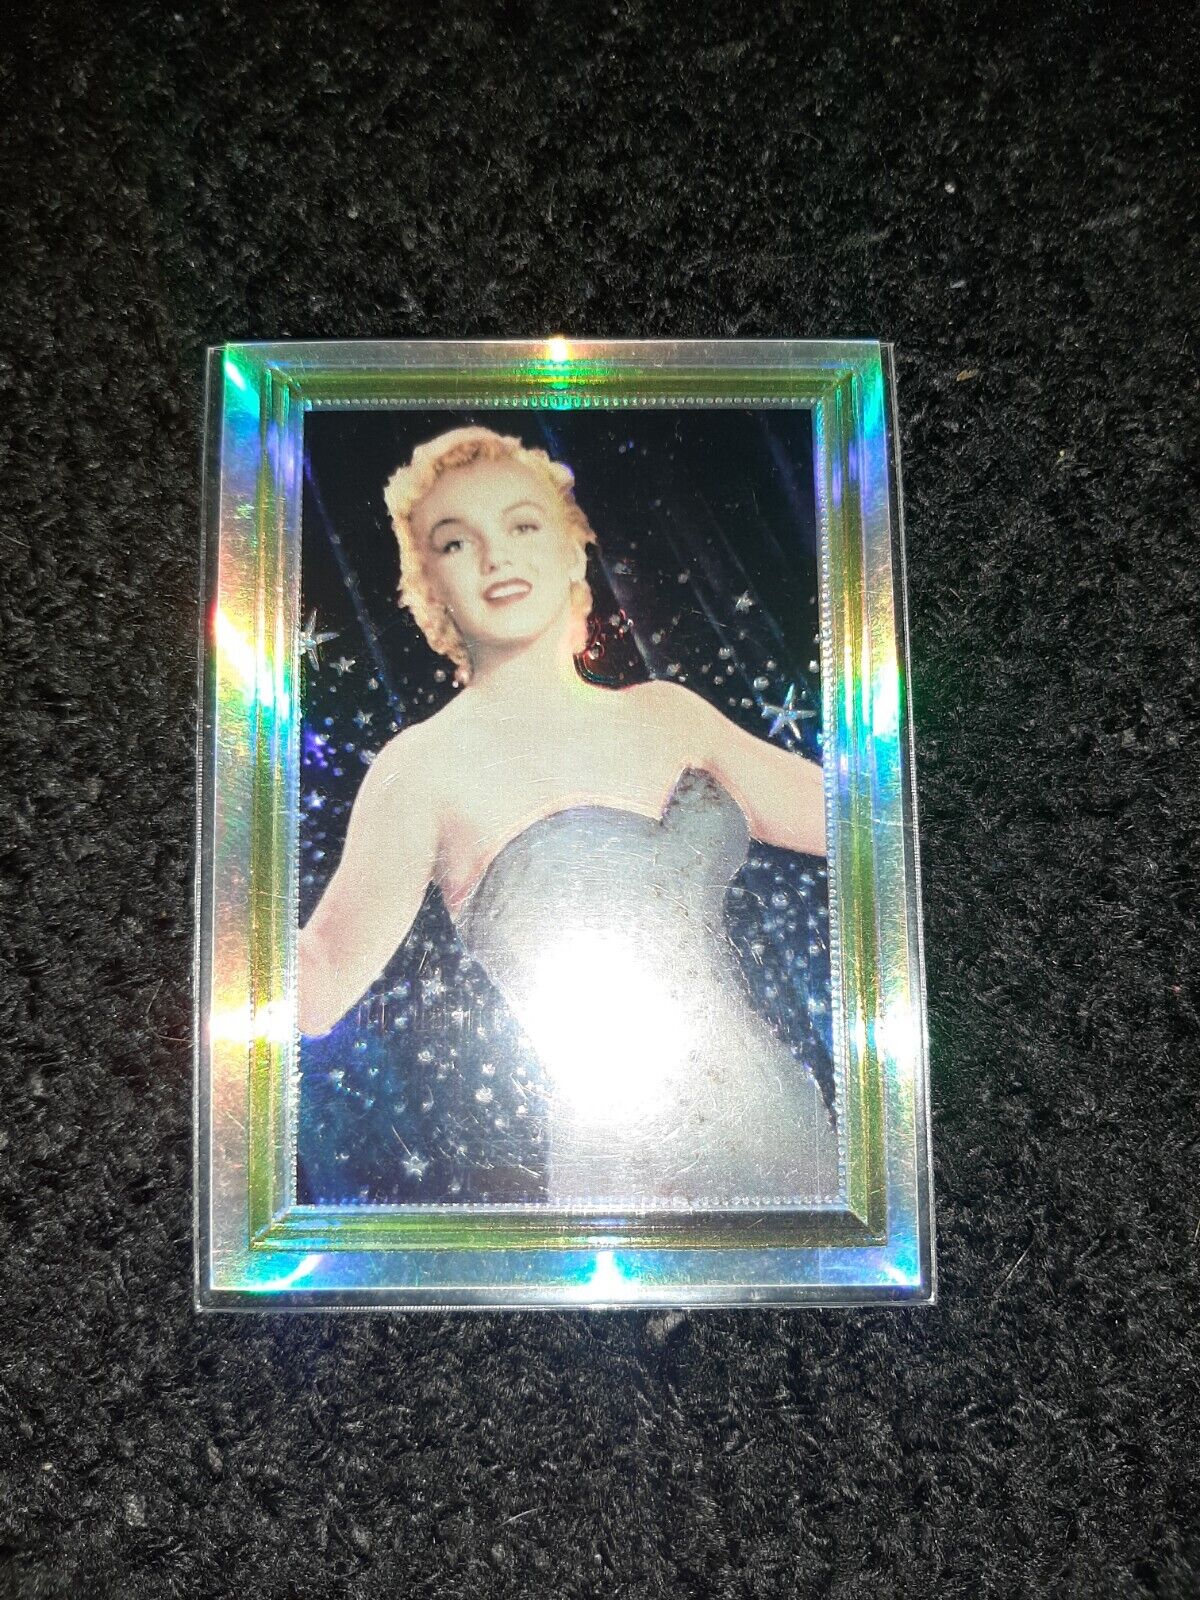 1995 Sports Time Marilyn Monroe II Holochrome Marilyn Monroe Chrome Card #8